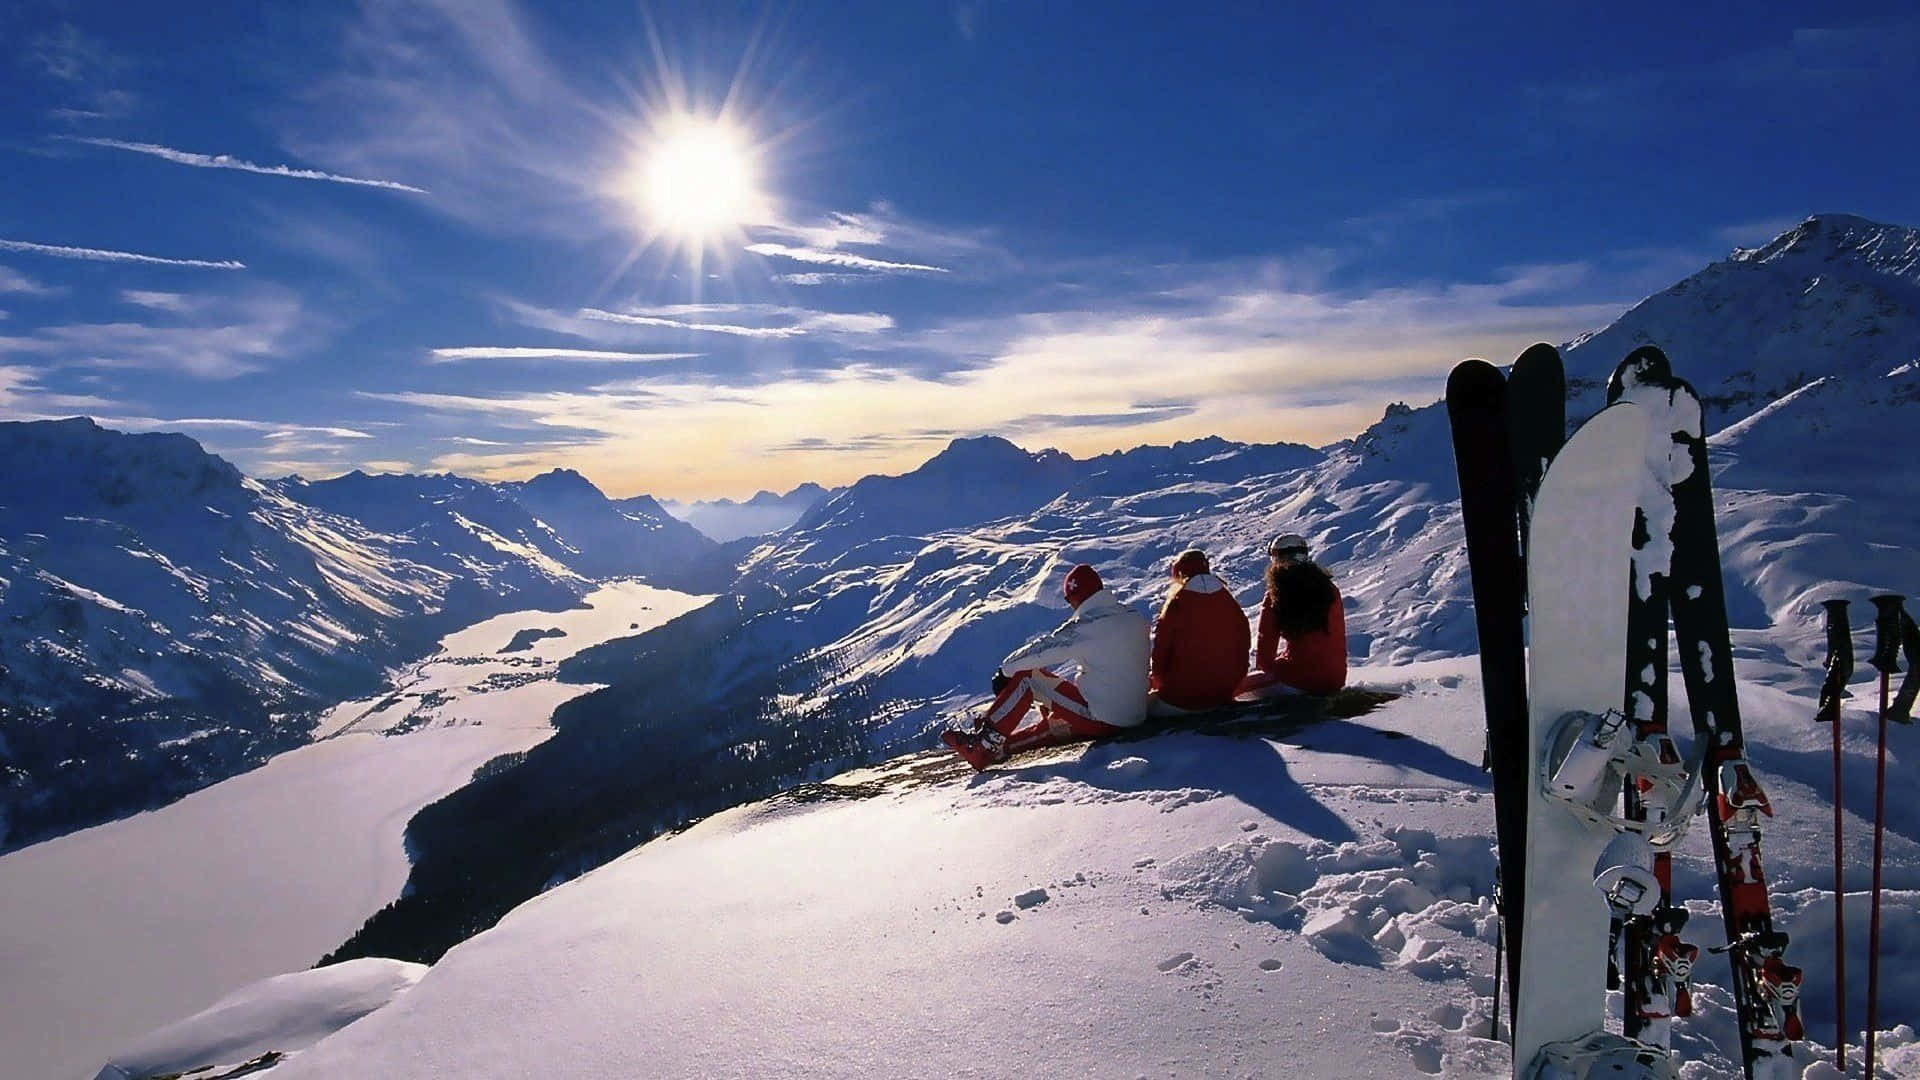 Winter Wonderland: Exciting Ski Adventure in Snowy Mountains Wallpaper